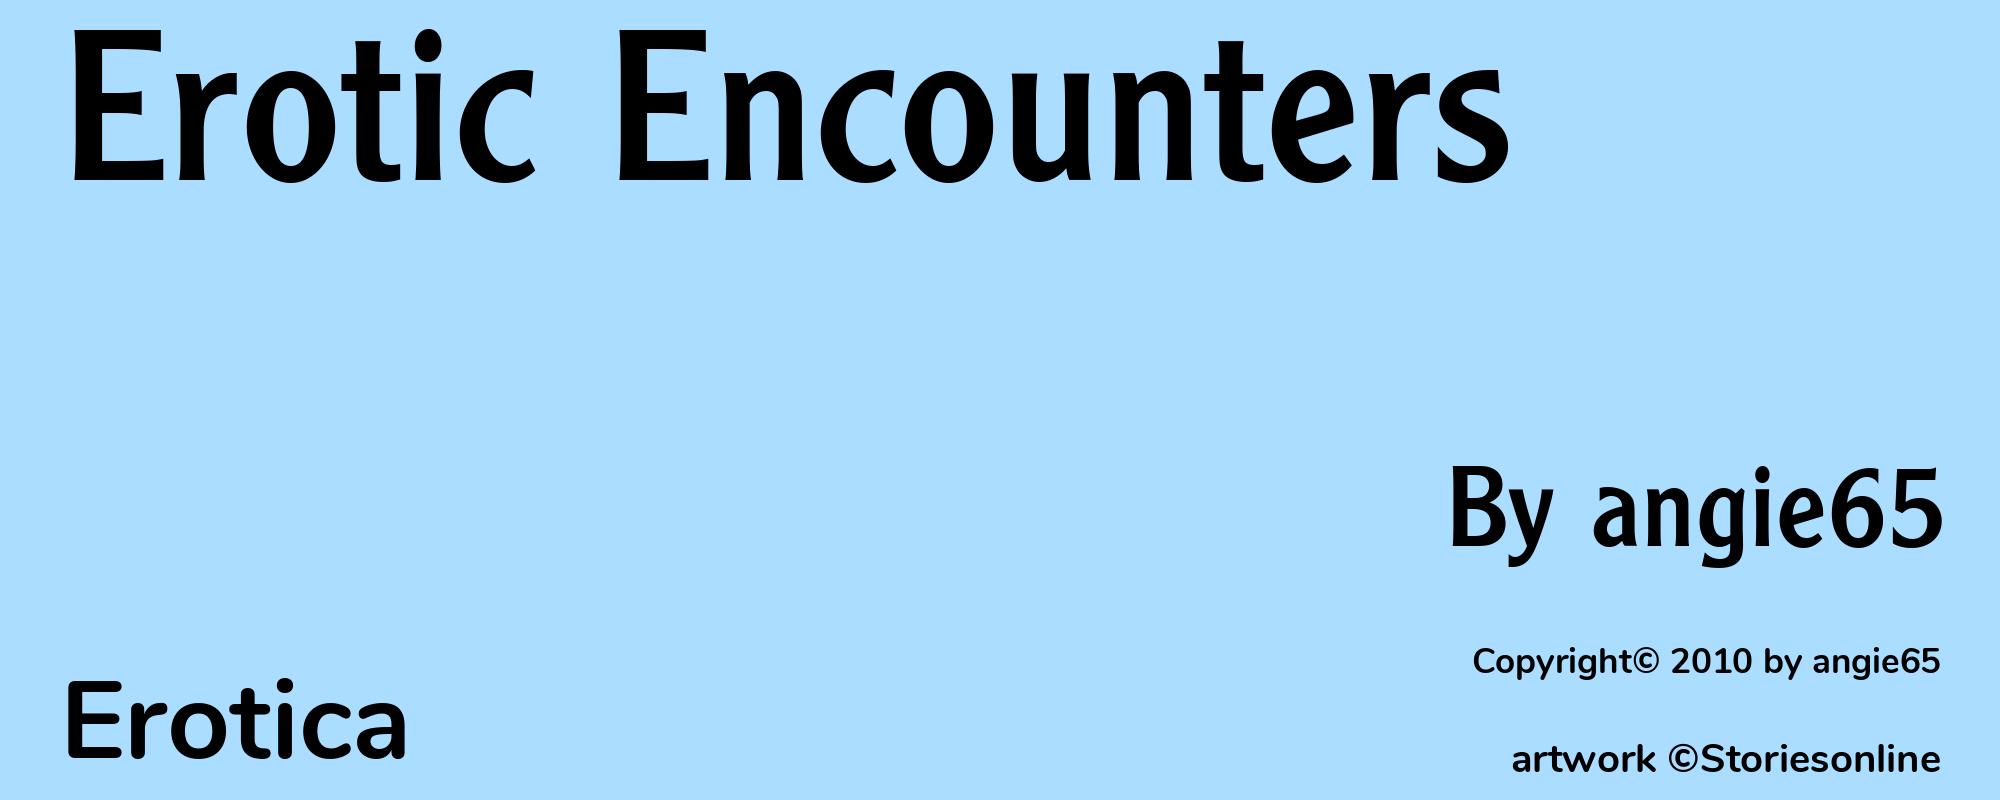 Erotic Encounters - Cover